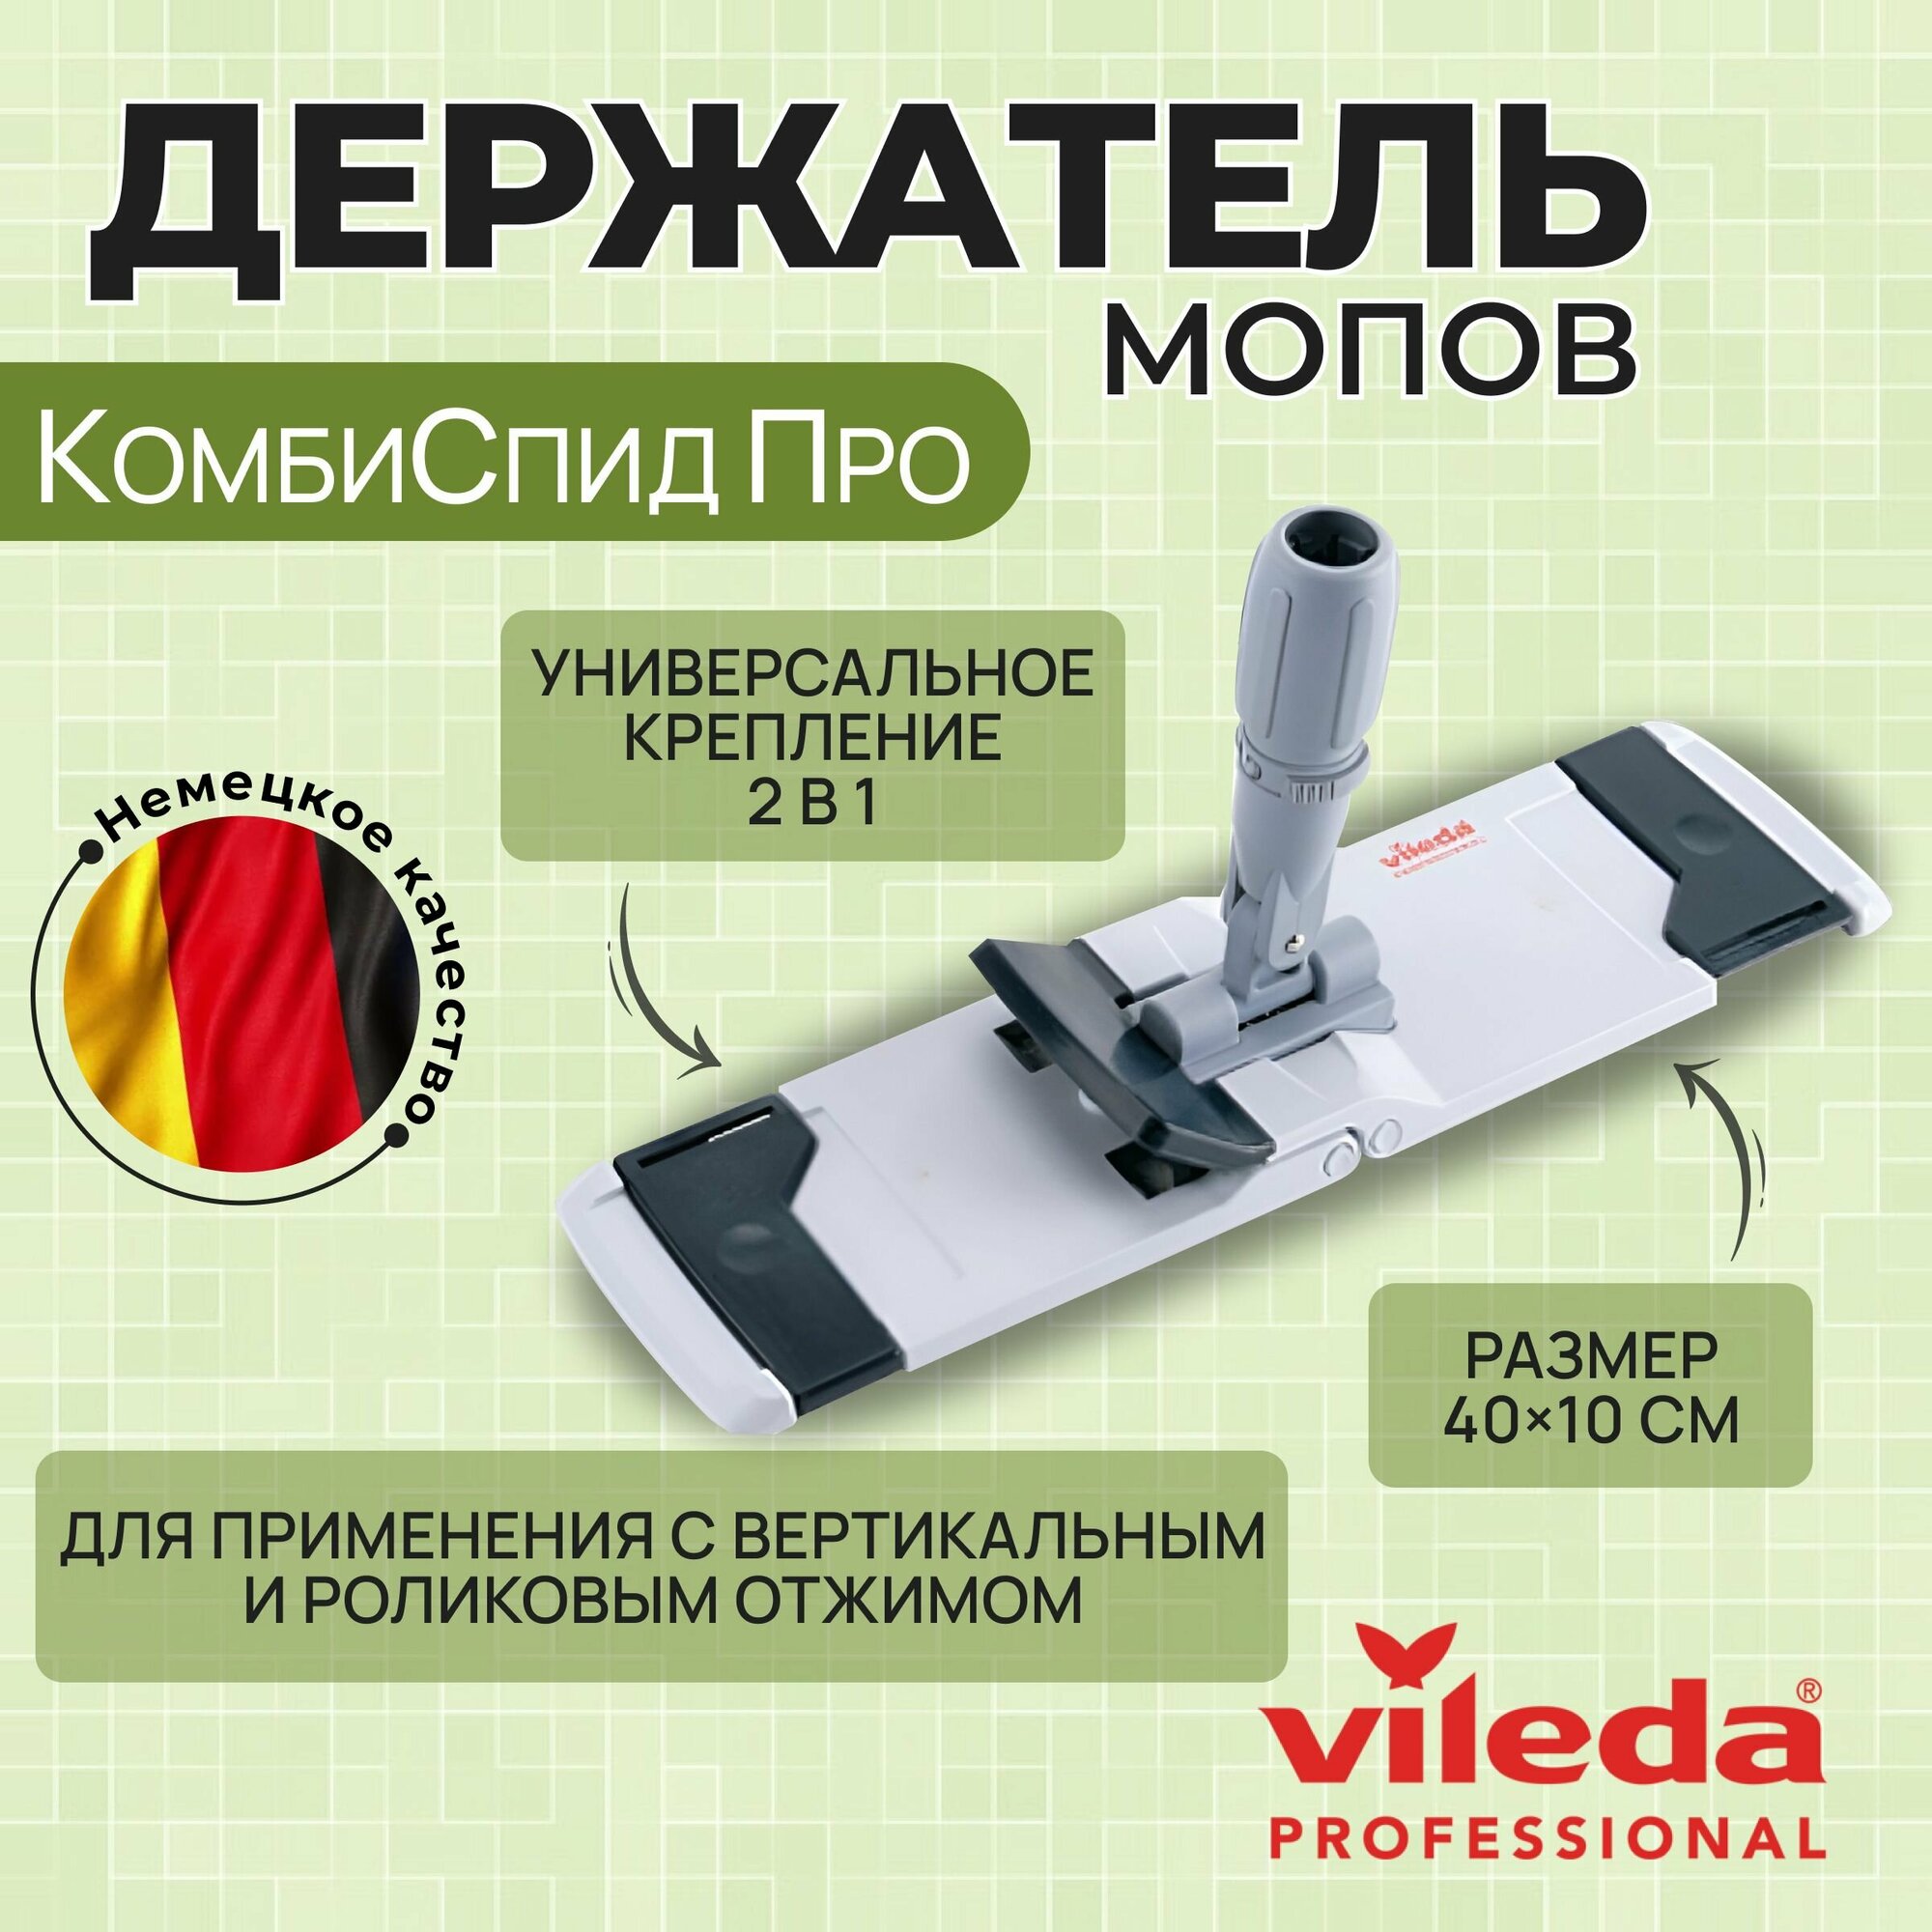 Держатель флаундер моющих насадок мопов, Vileda Professional, КомбиСпид Про, 40 см